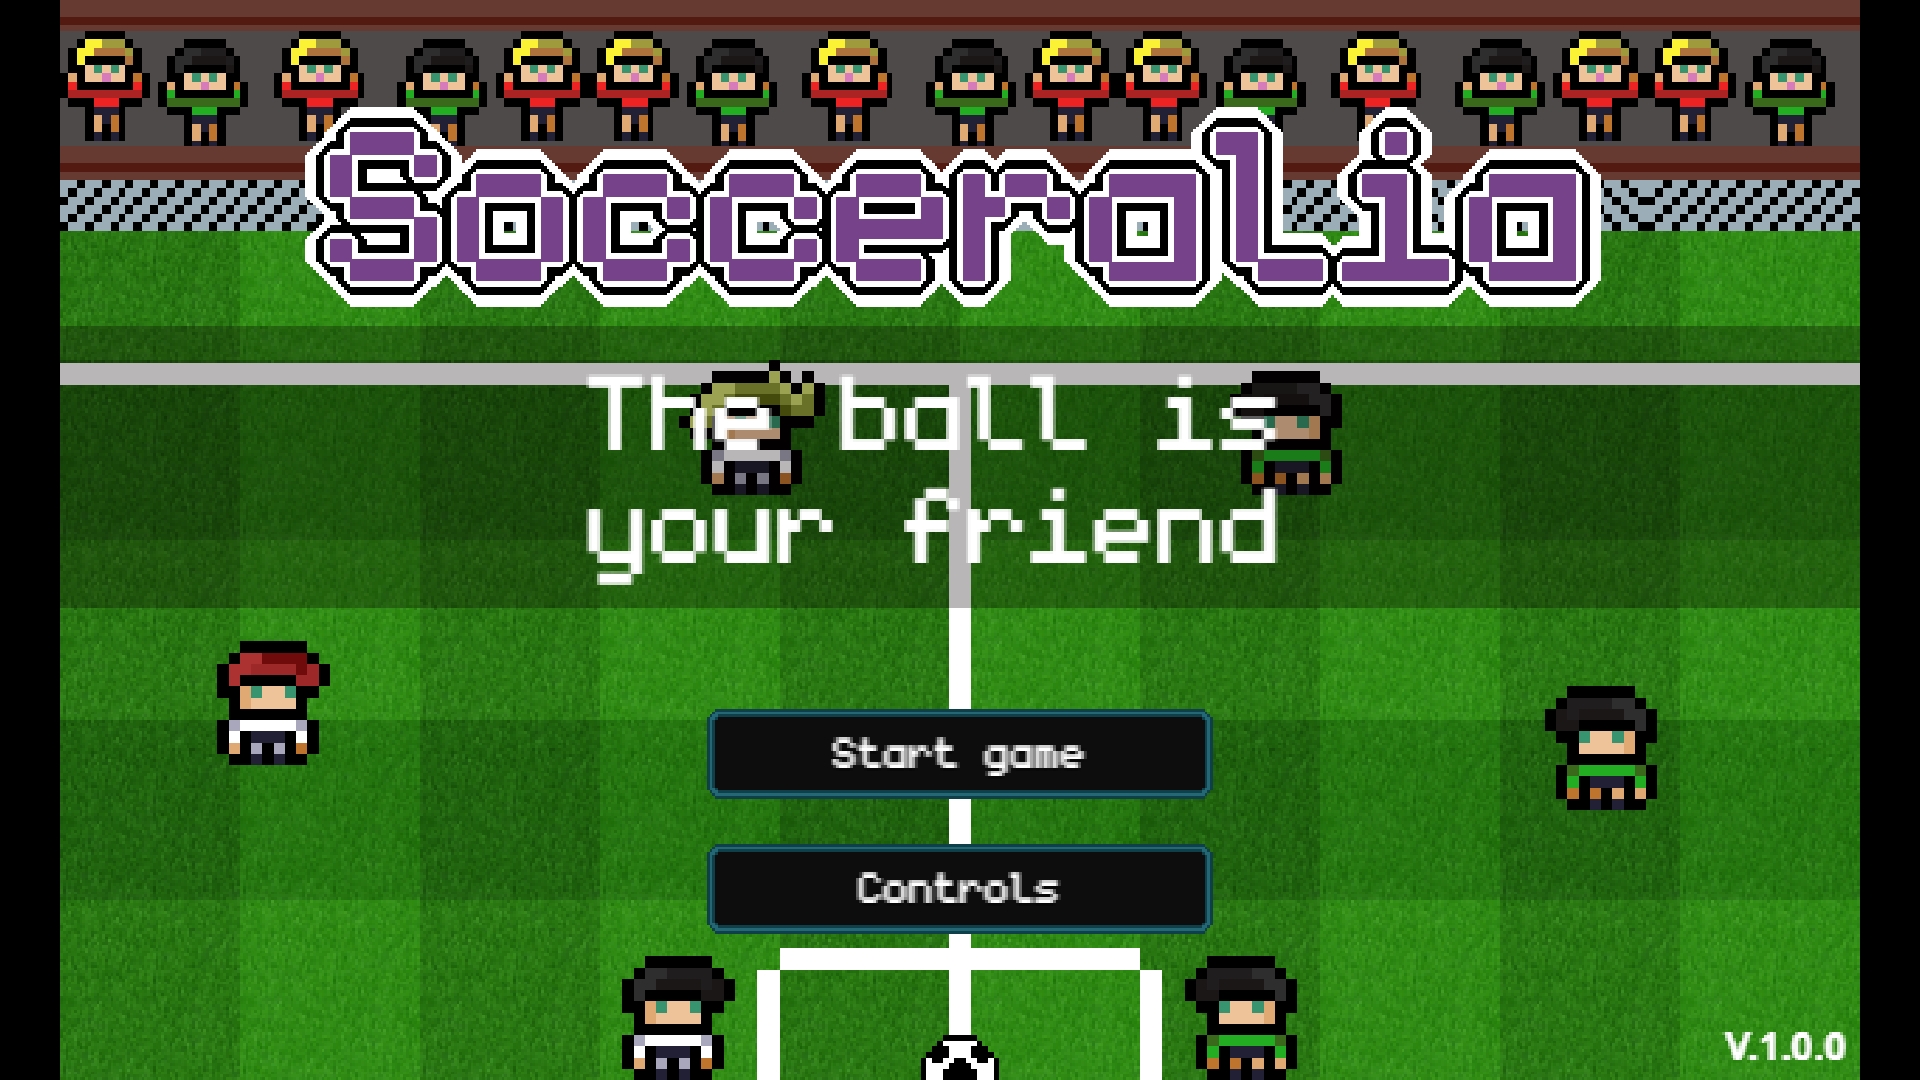 NEW! 2d Socceralia (V.1.0.0)